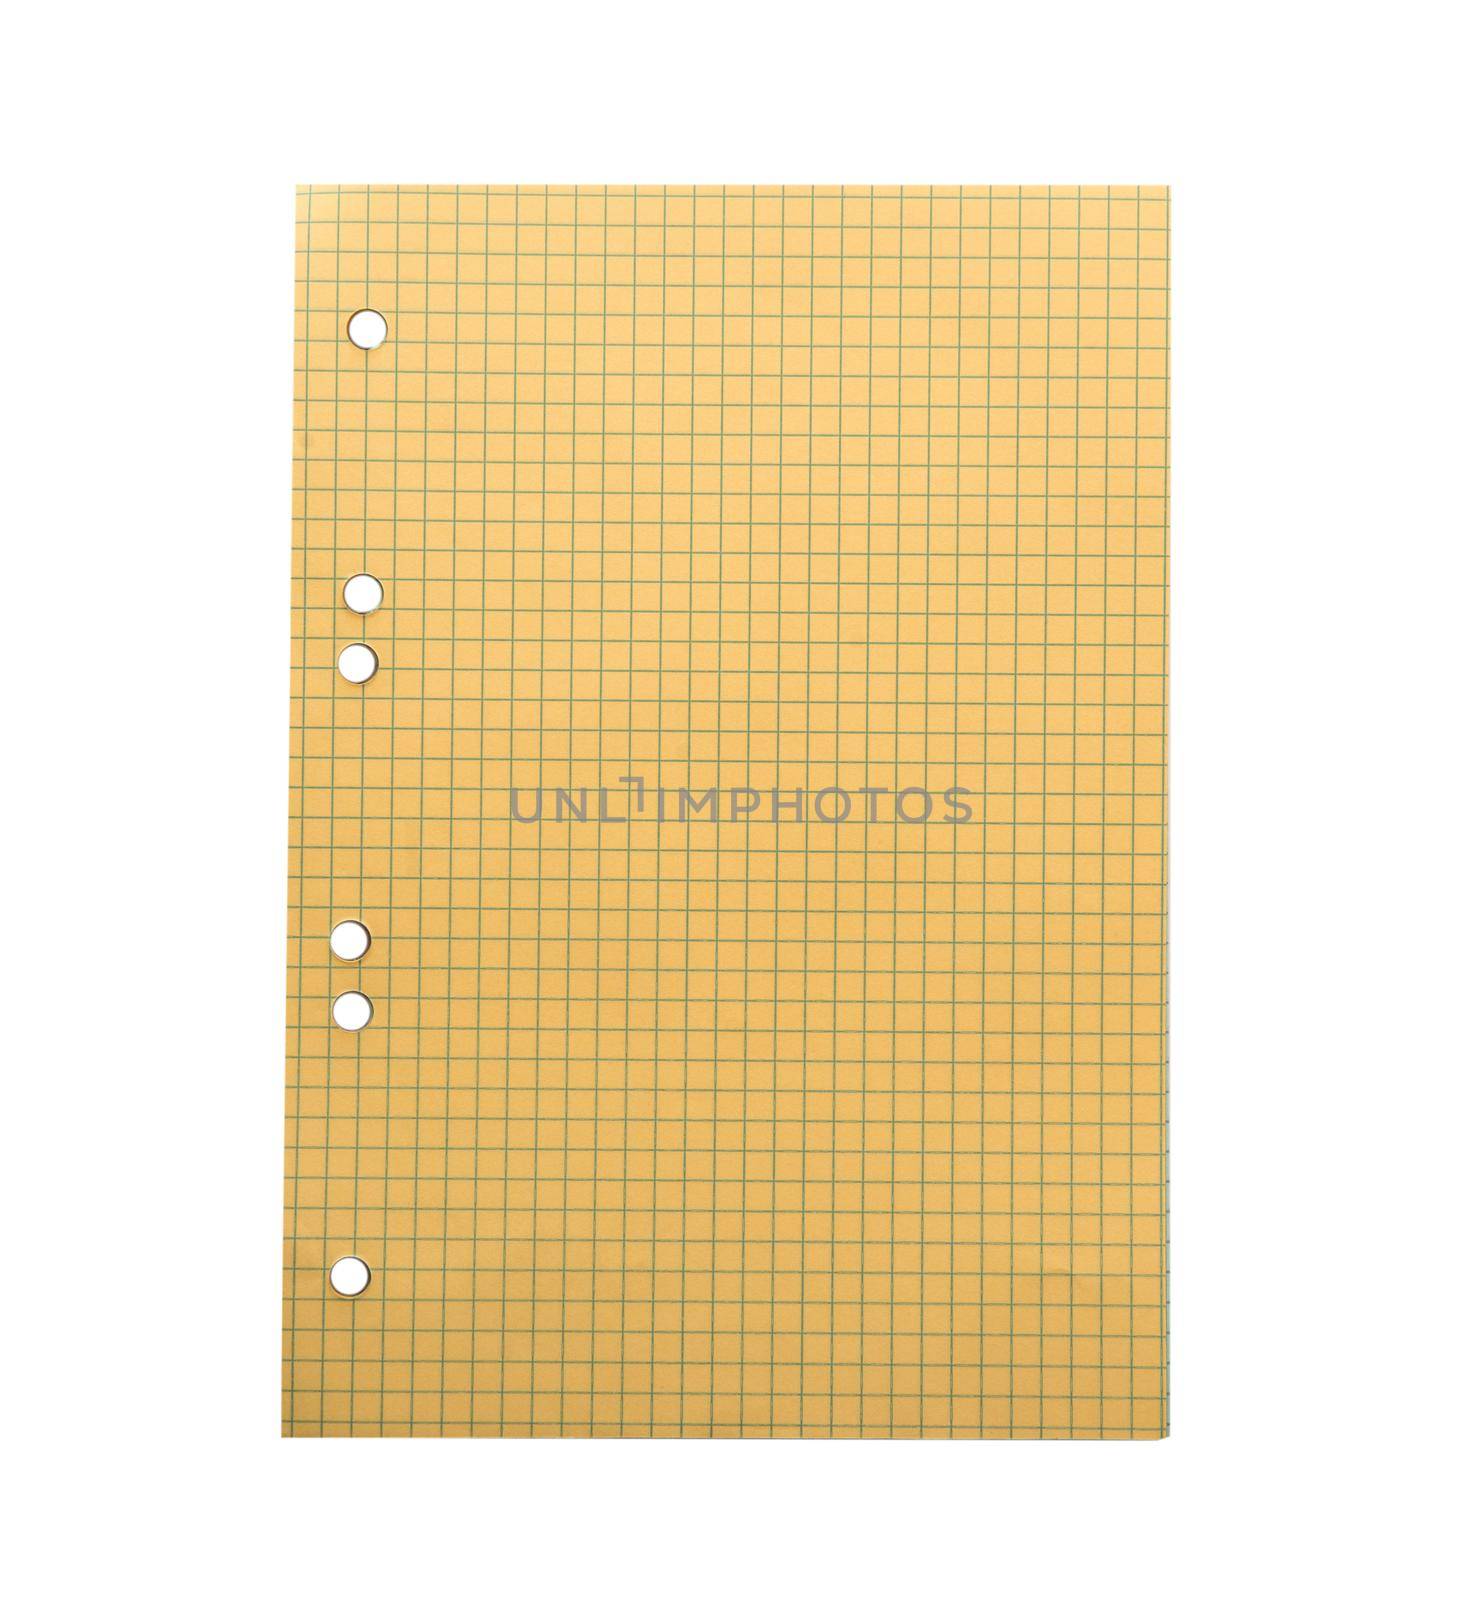 yellow sheet of paper by tan4ikk1